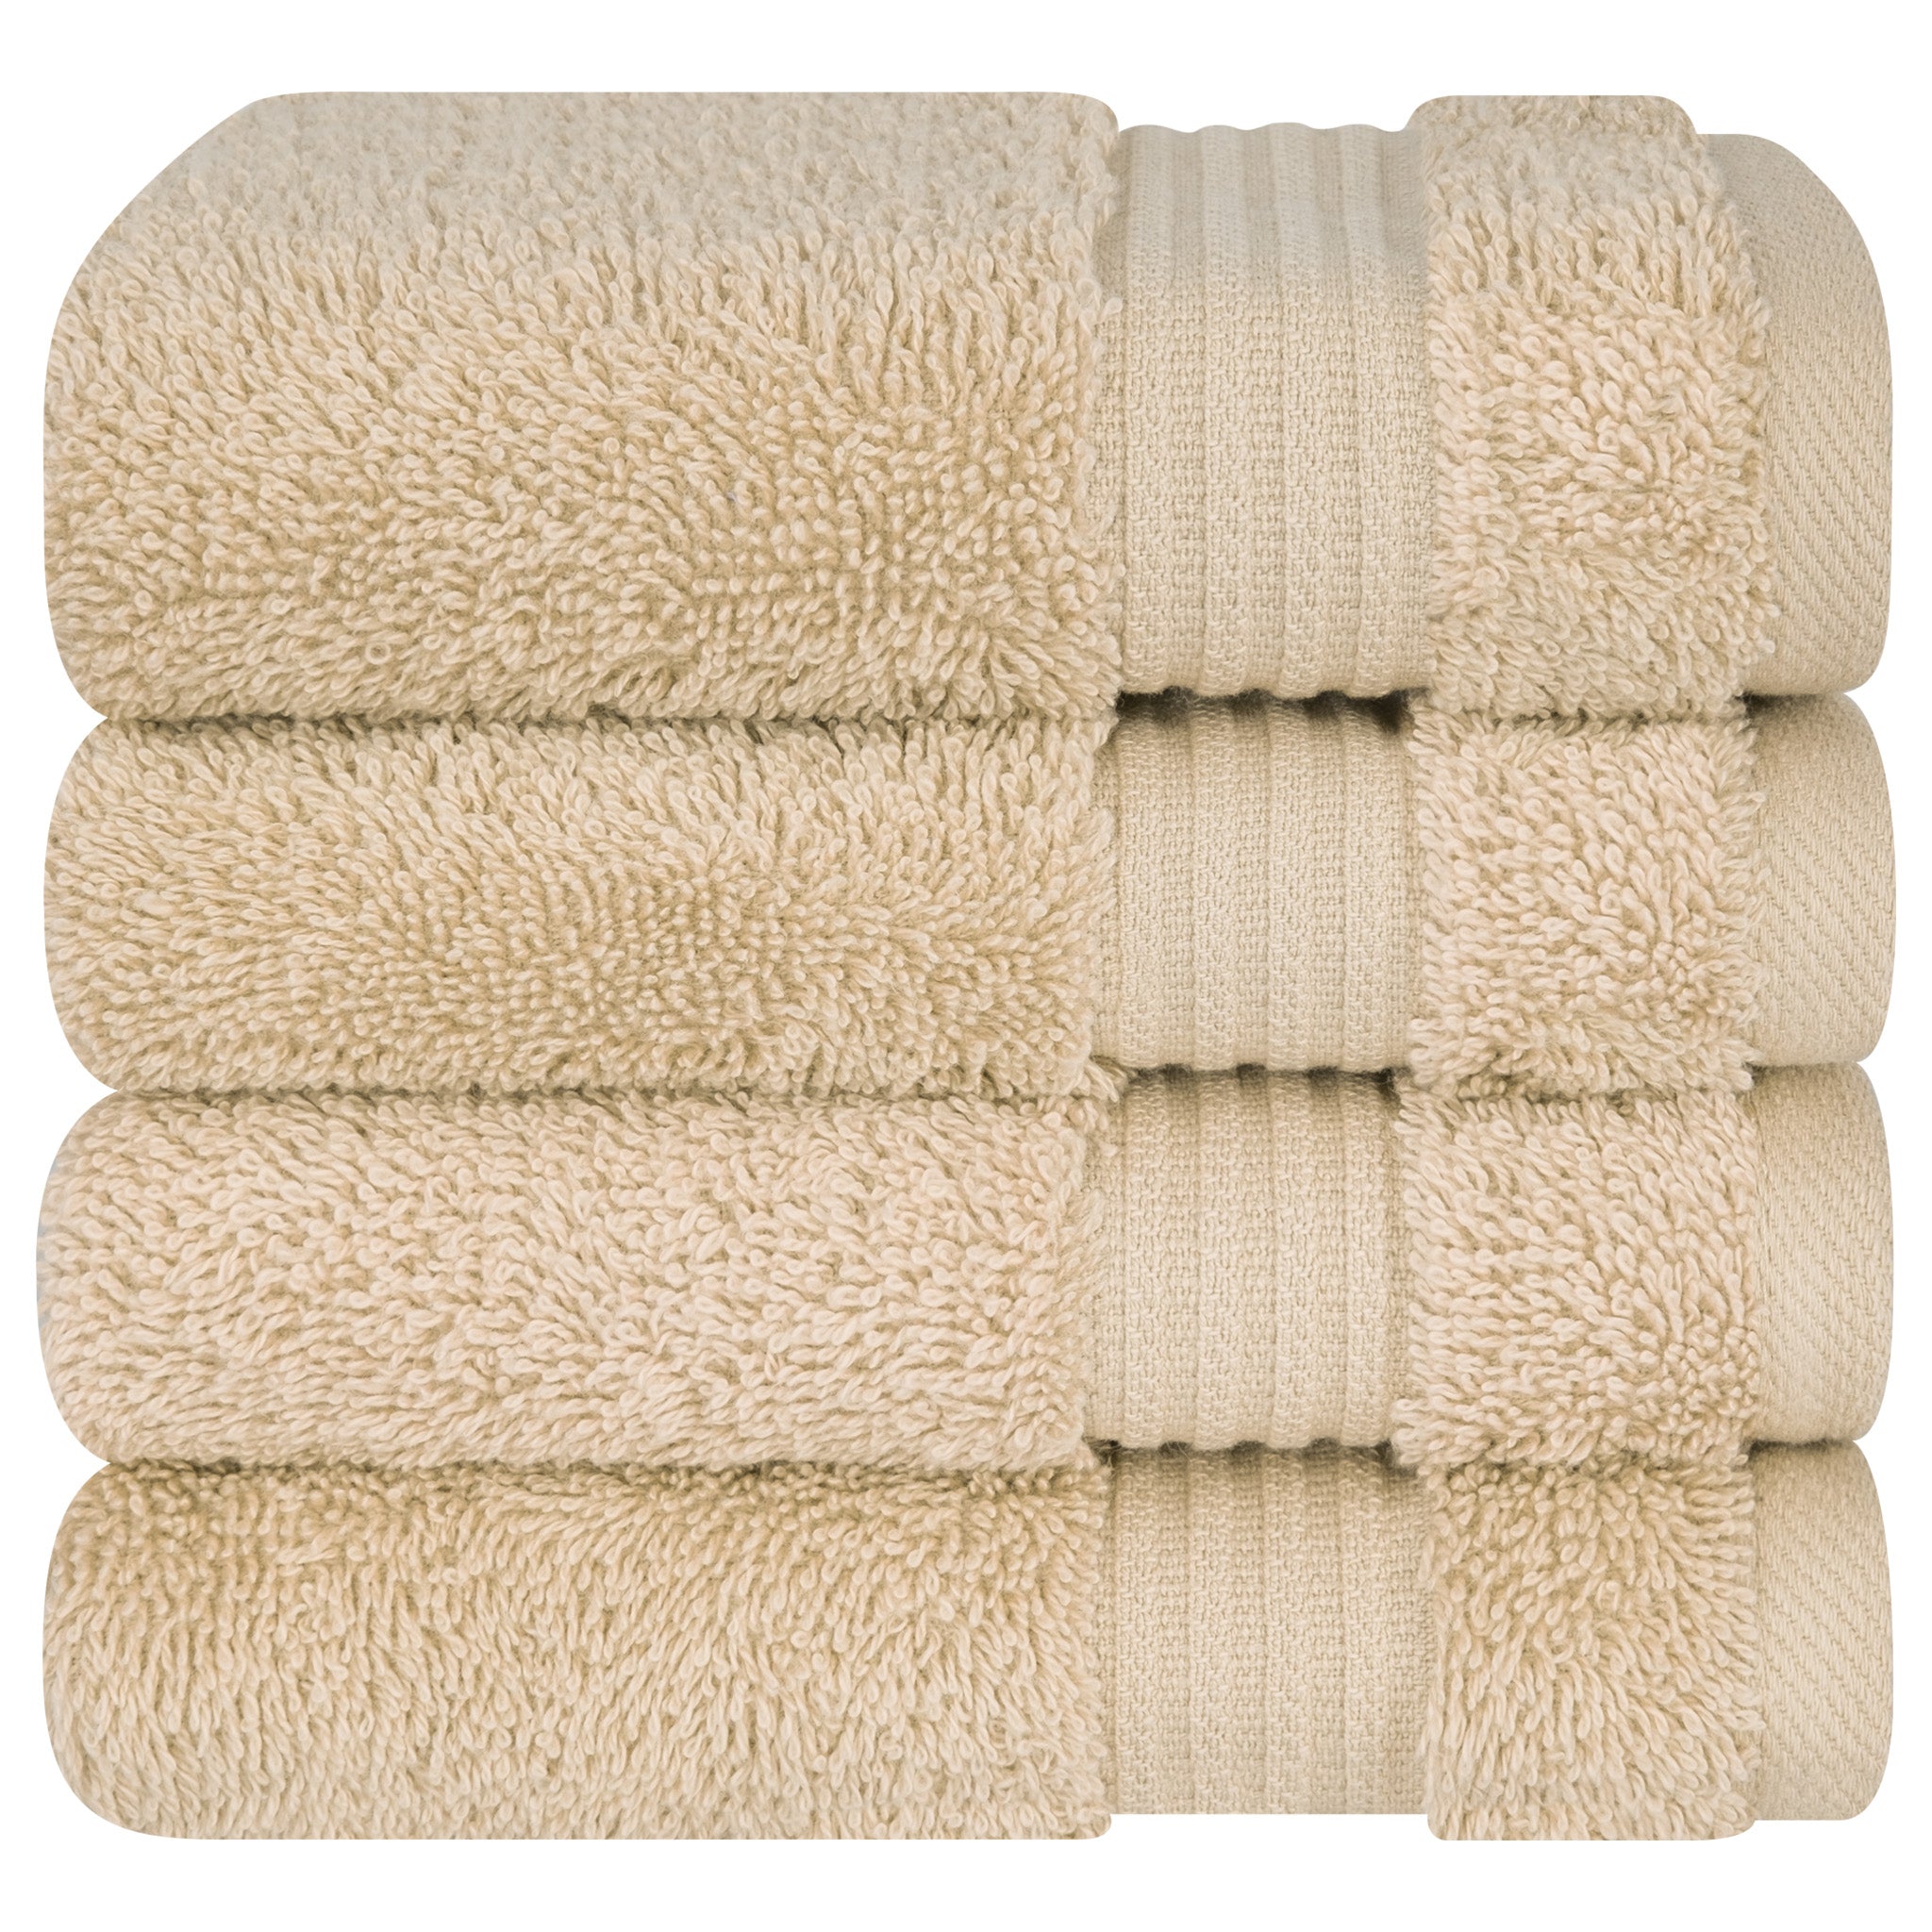 American Soft Linen Bekos 100% Cotton Turkish Towels, 4 Piece Washcloth Towel Set -sand-taupe-05